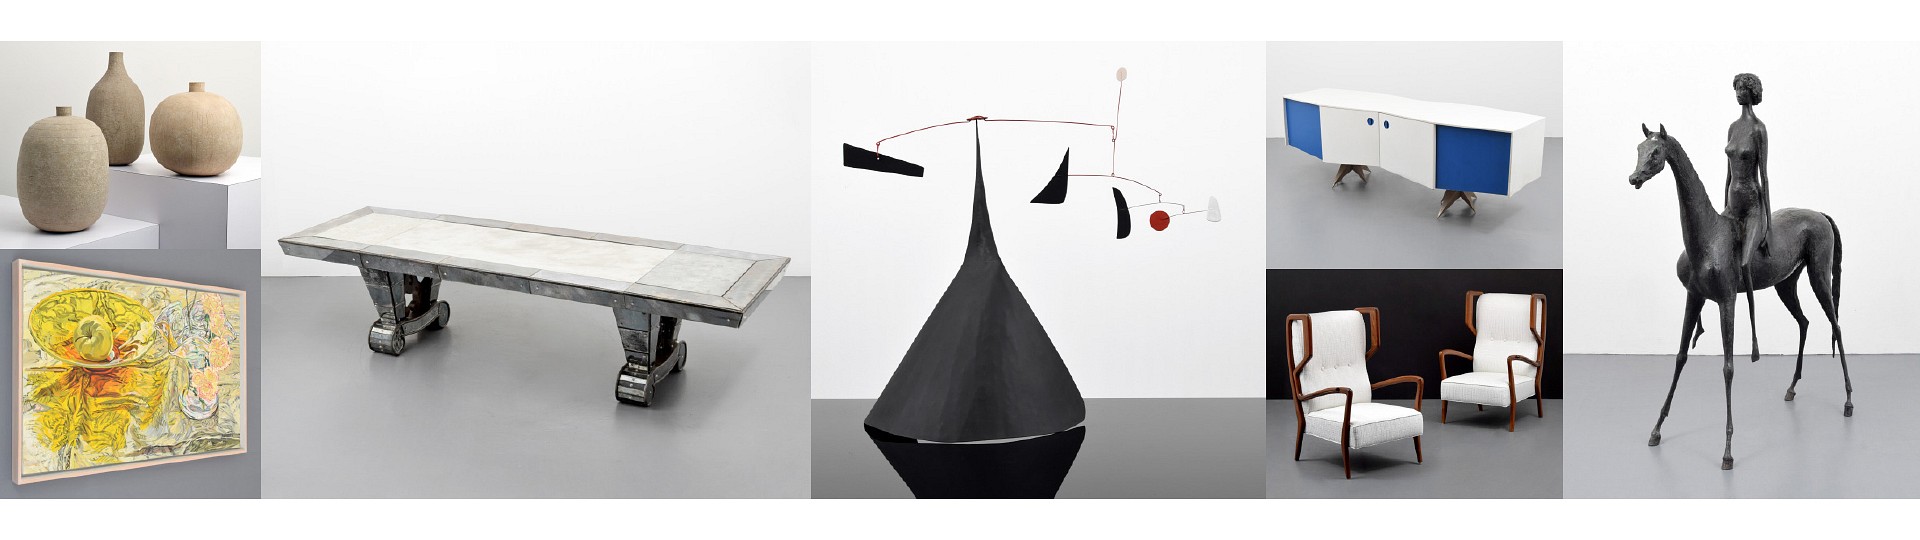 Modern Art & Design, 3 Sessions: Fall 2020 by Palm Beach Modern Auctions